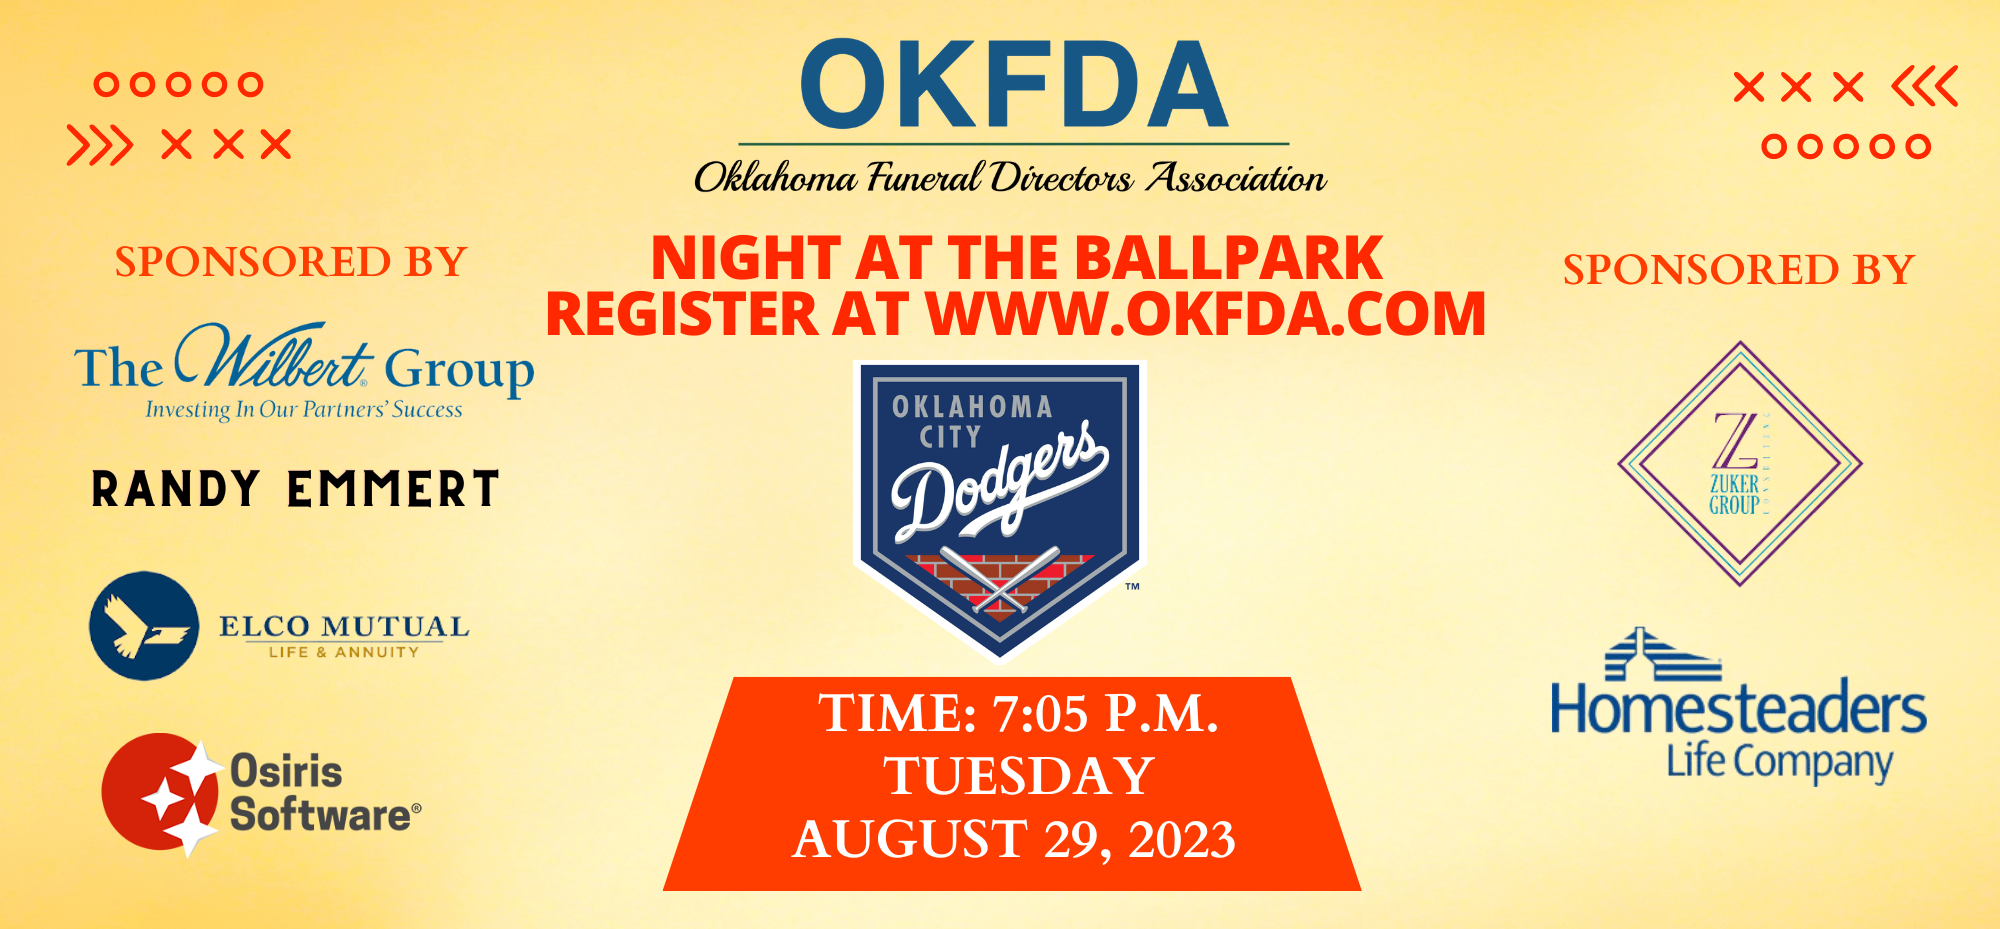 OKFDA Night at the Ballpark has been Rescheduled